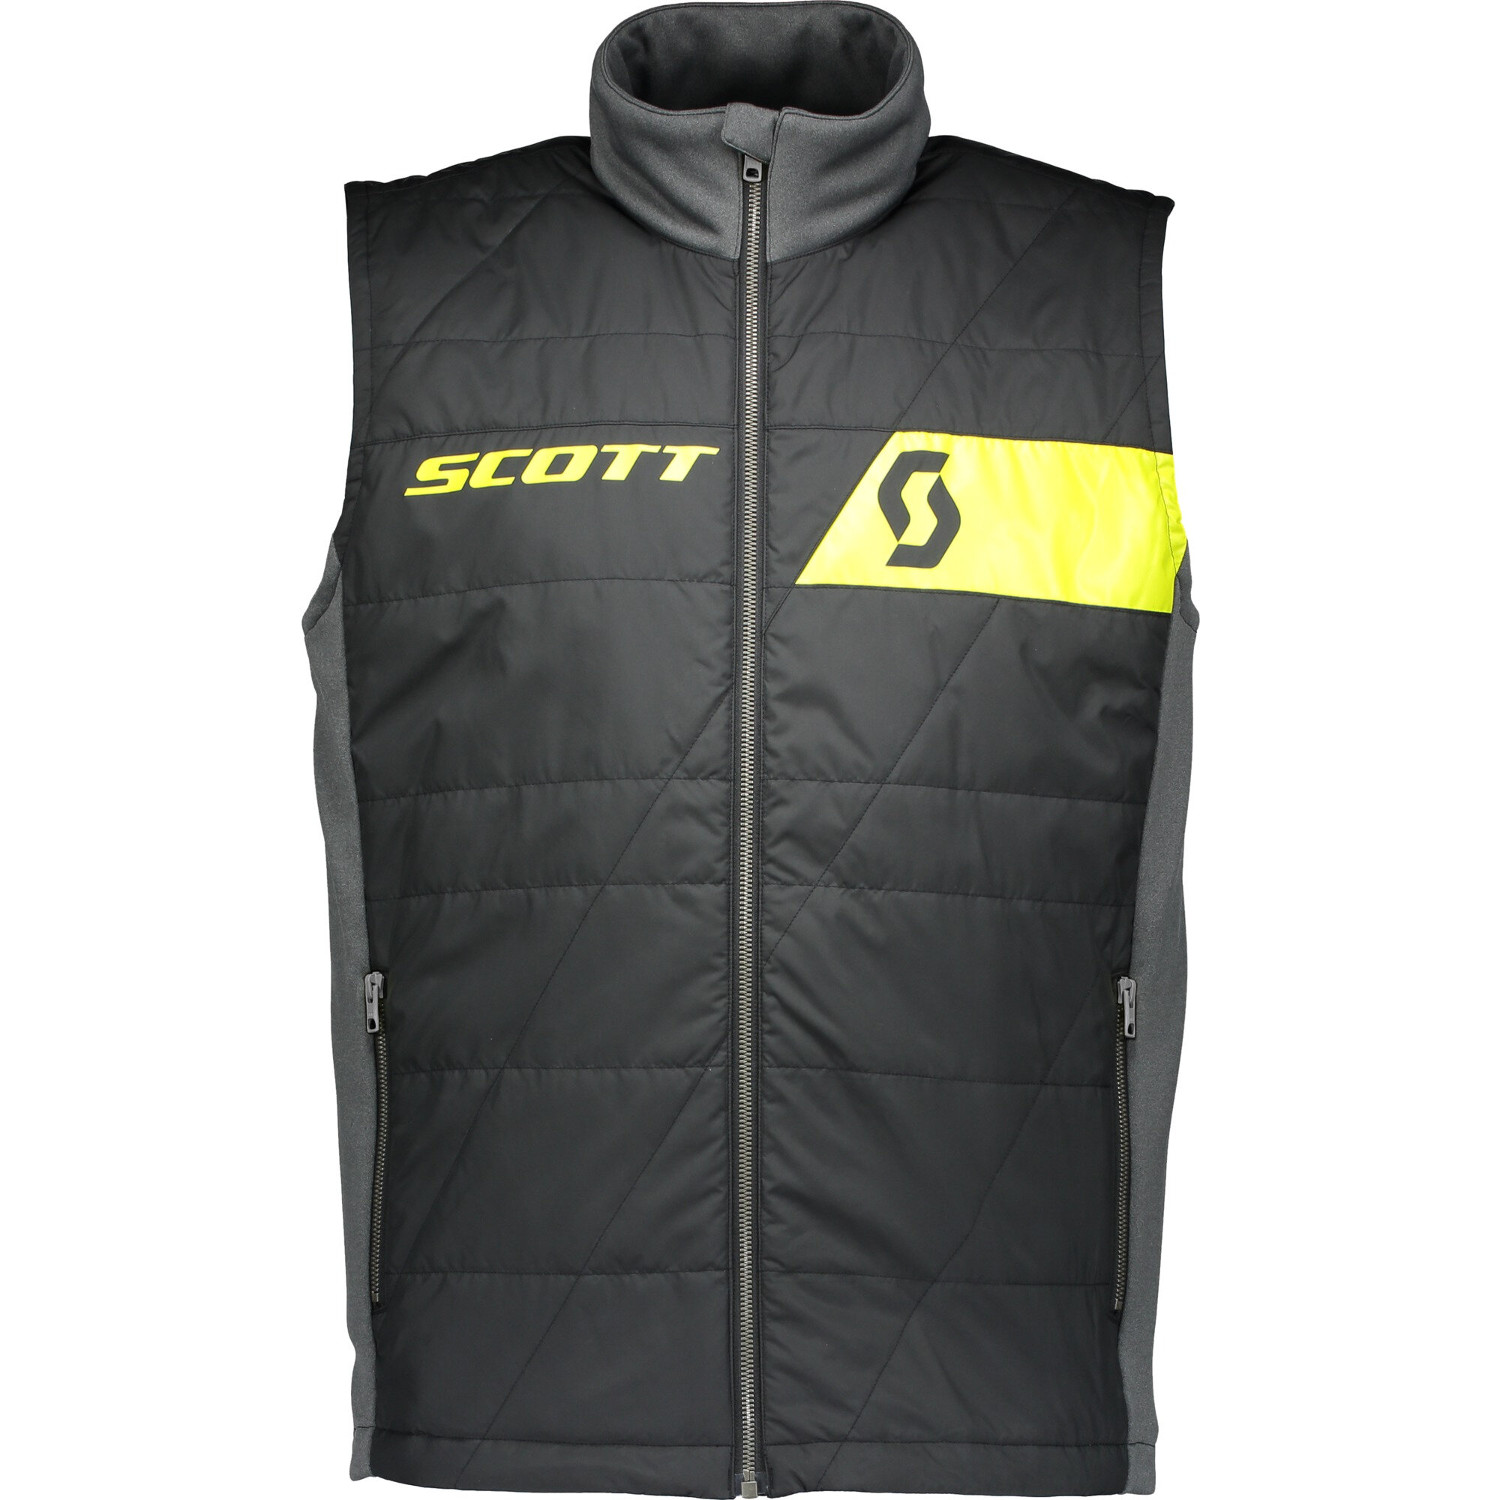 Scott Vest Factory Team Insulation Black/Sulphur Yellow